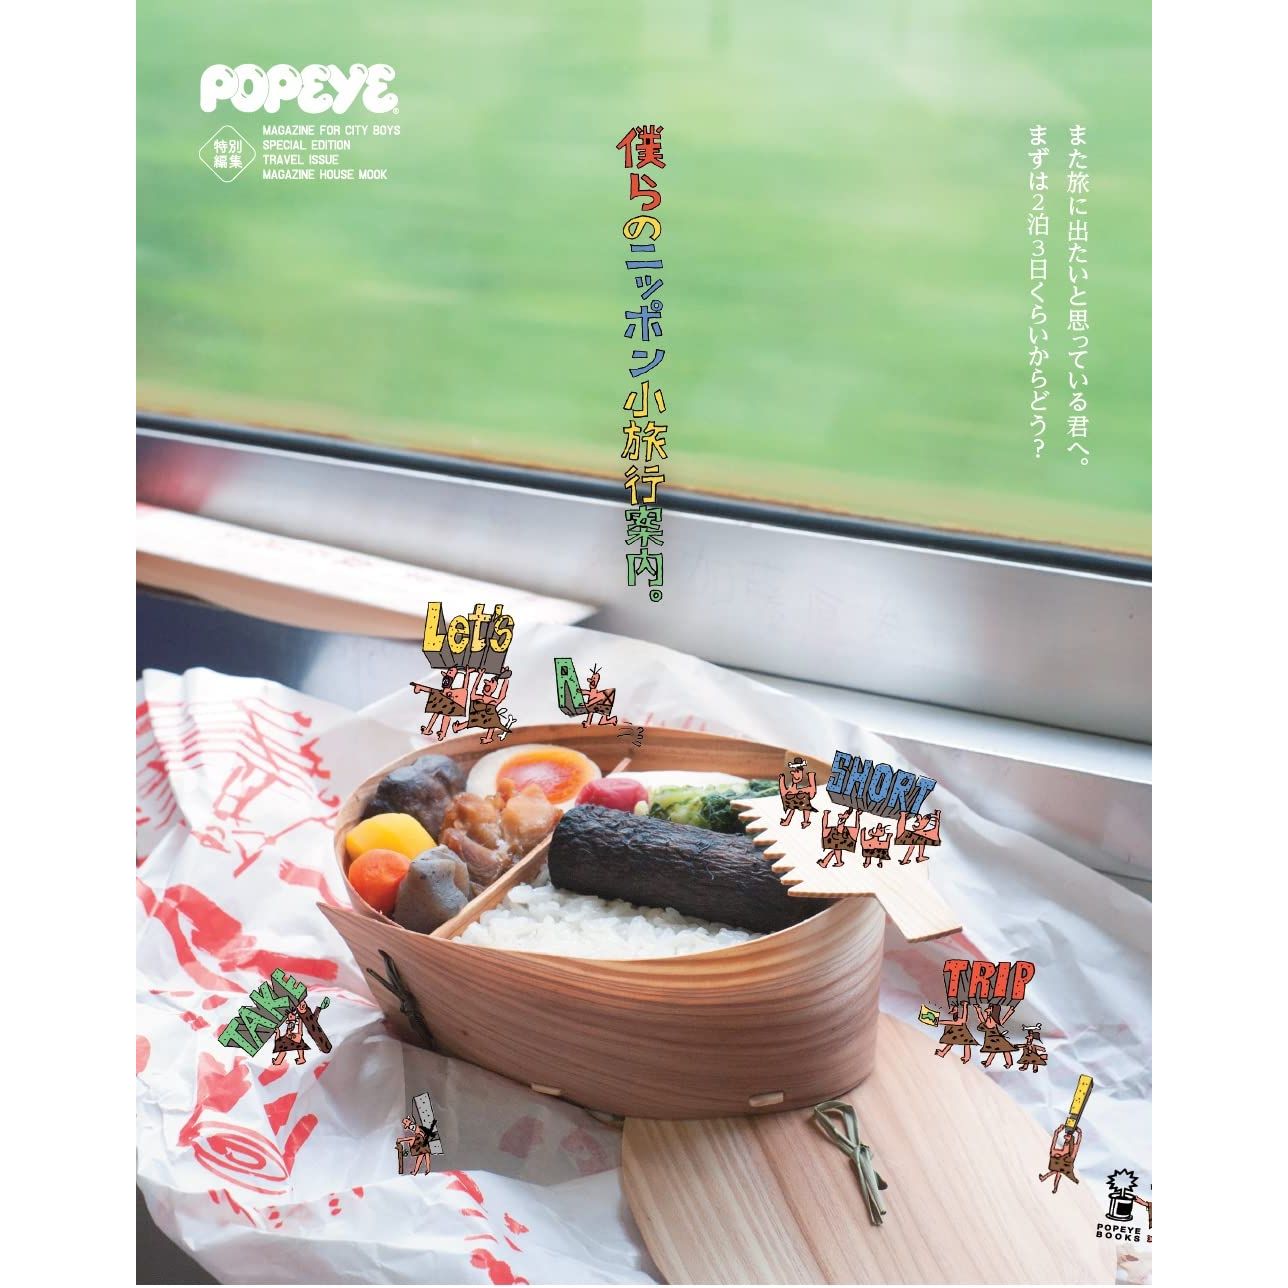 Popeye Japan Travel Issue